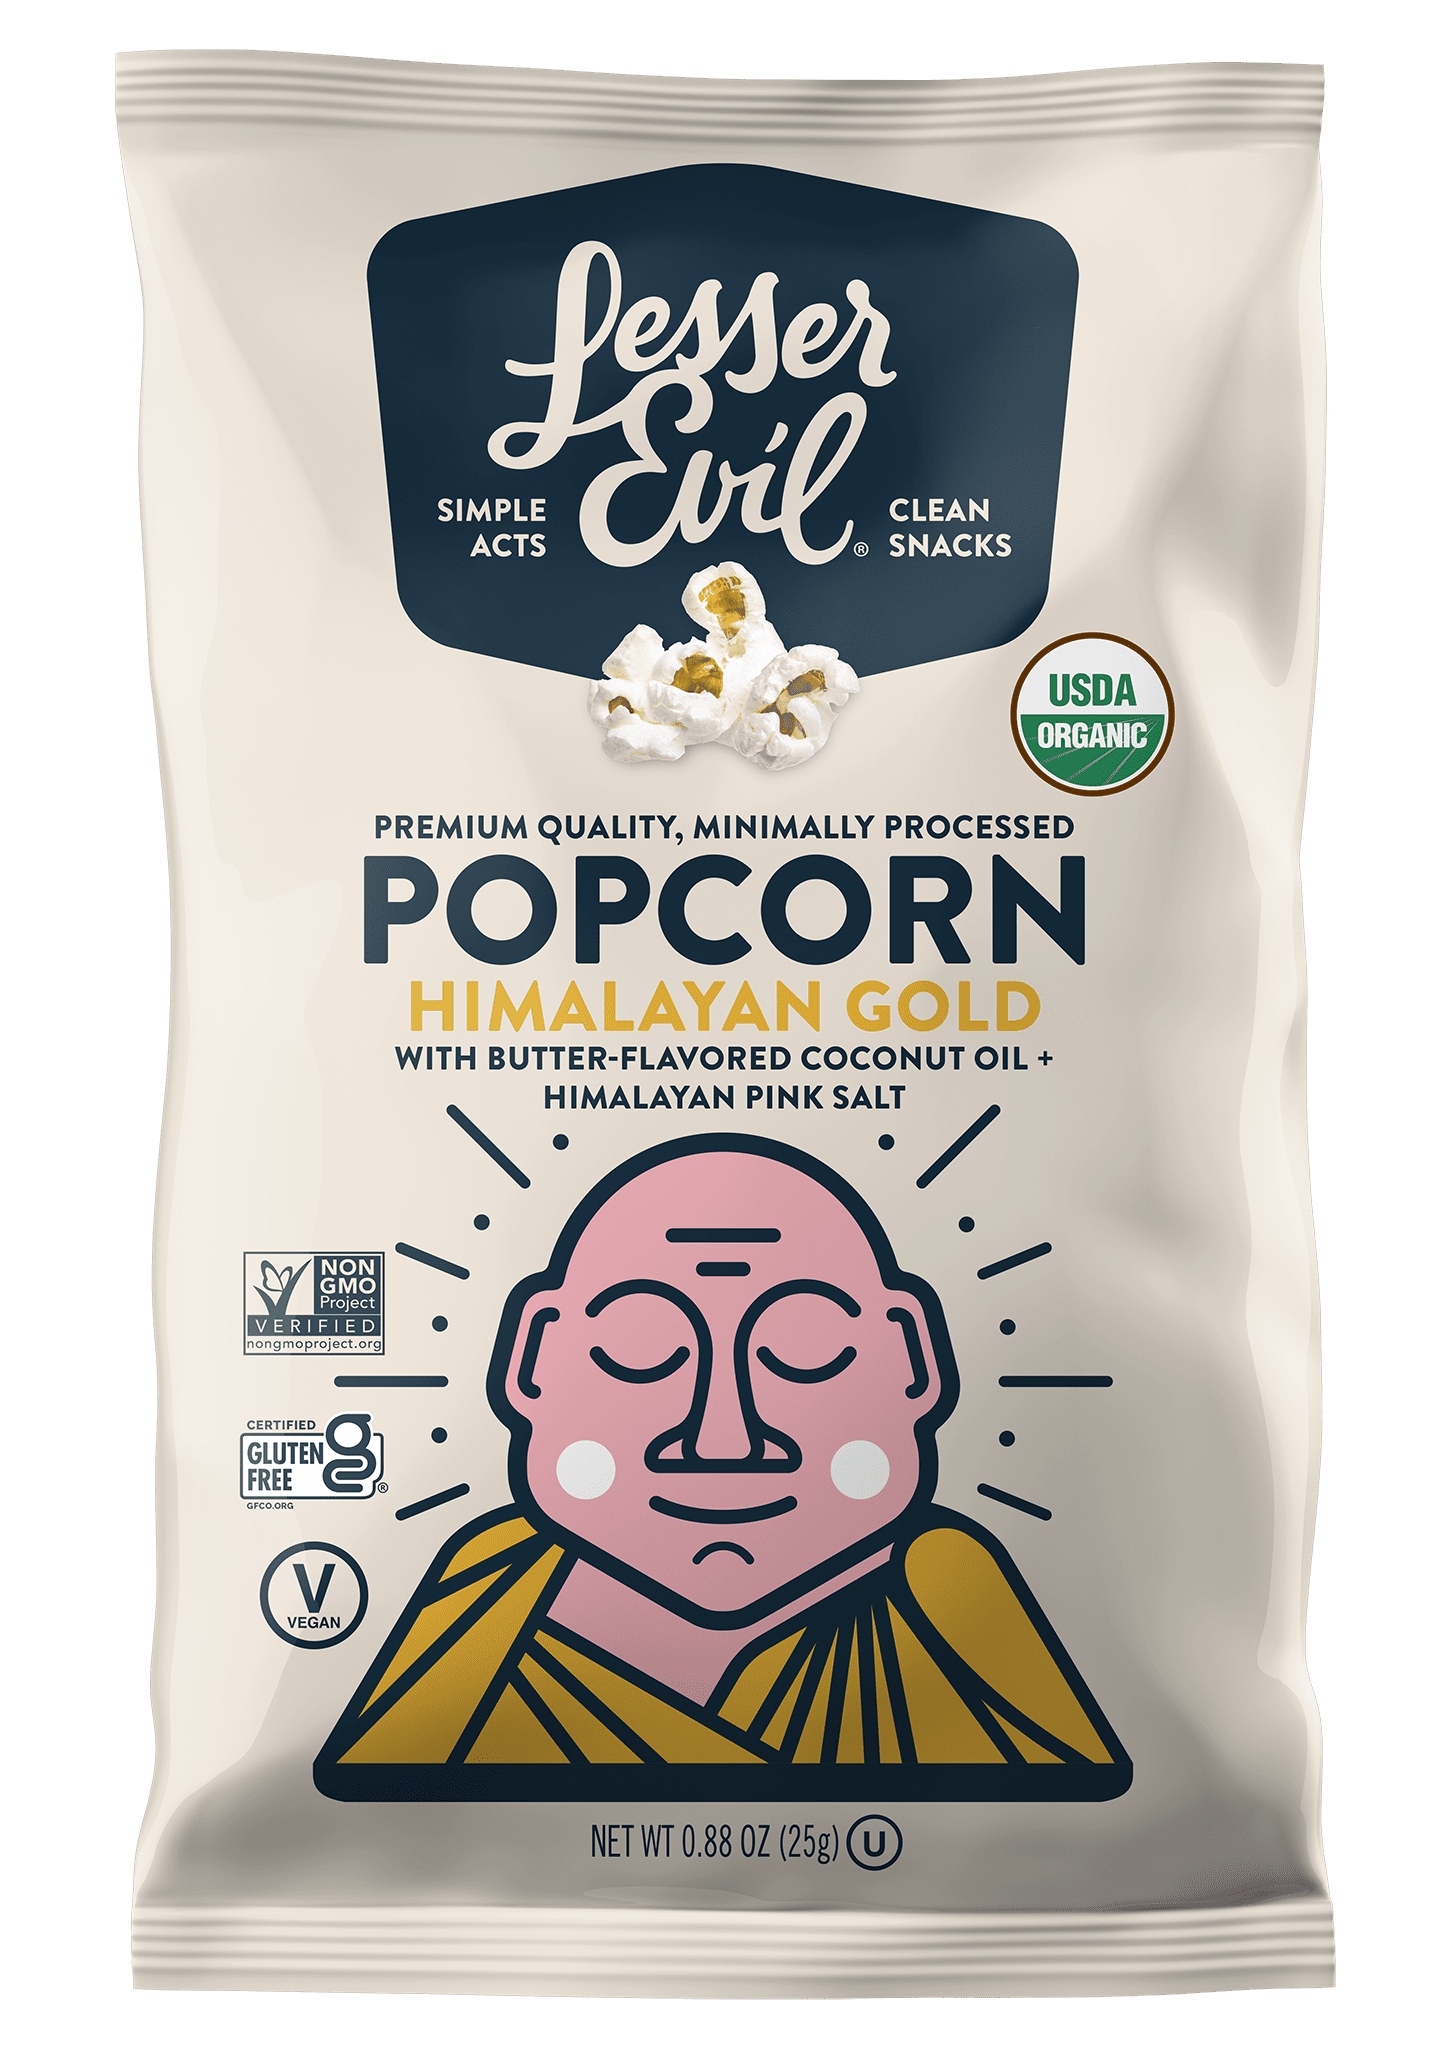 ''''LesserEvil, Organic Popcorn Himalayan Gold'''' 18 units per case 0.9 oz